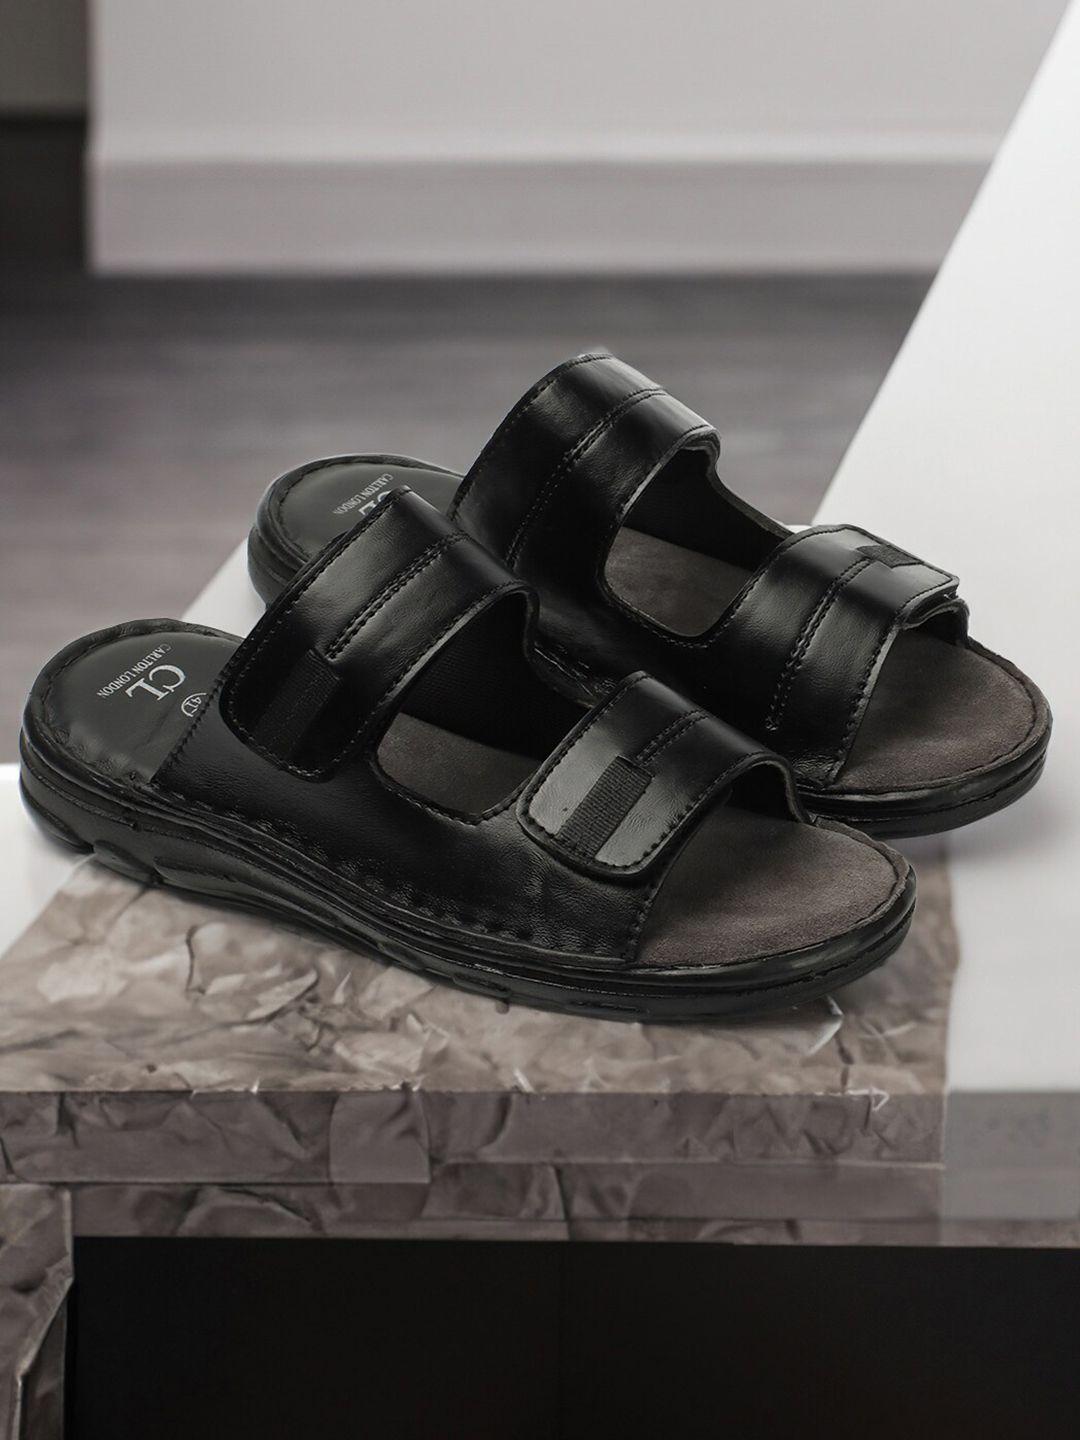 carlton london men two strap lightweight leather comfort sandals